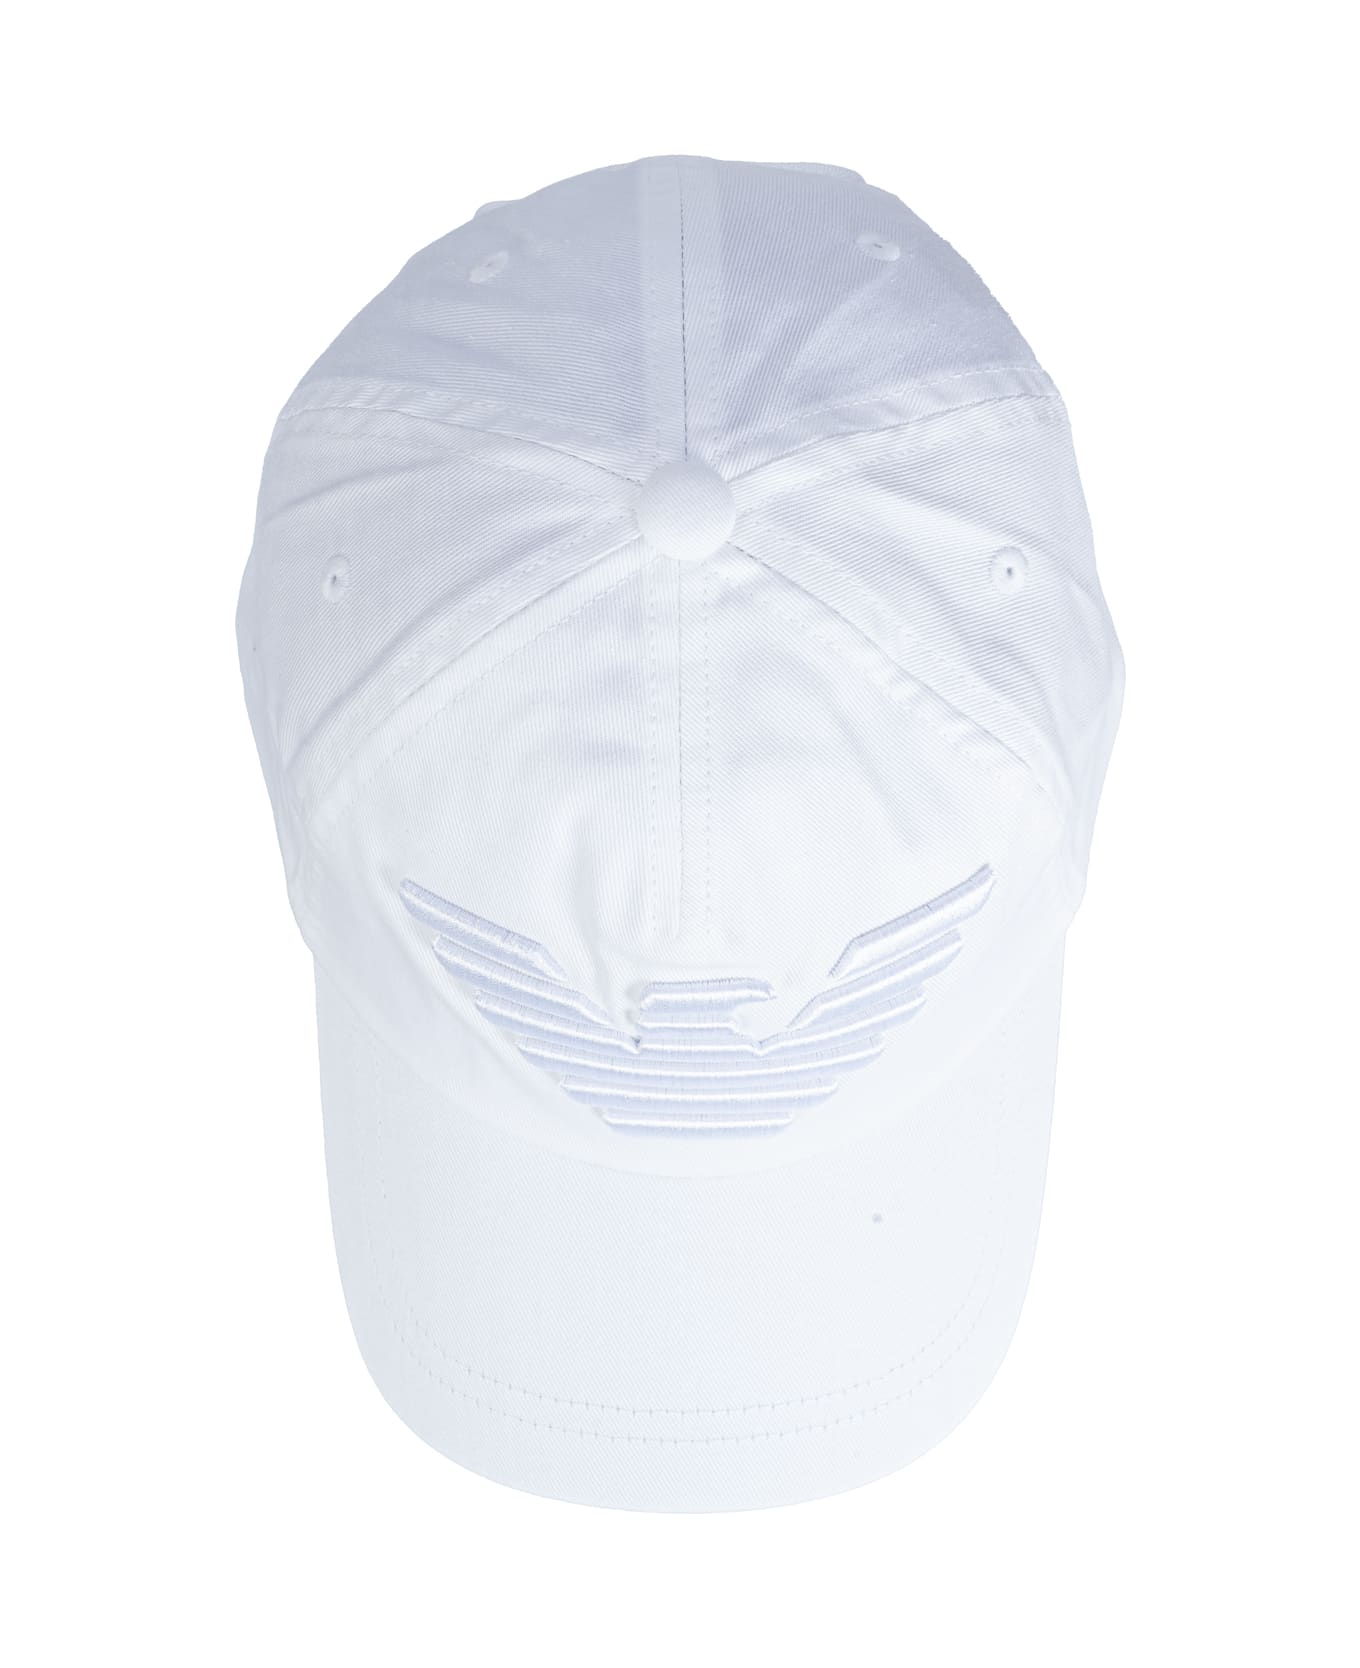 Emporio Armani Hats White - White 帽子